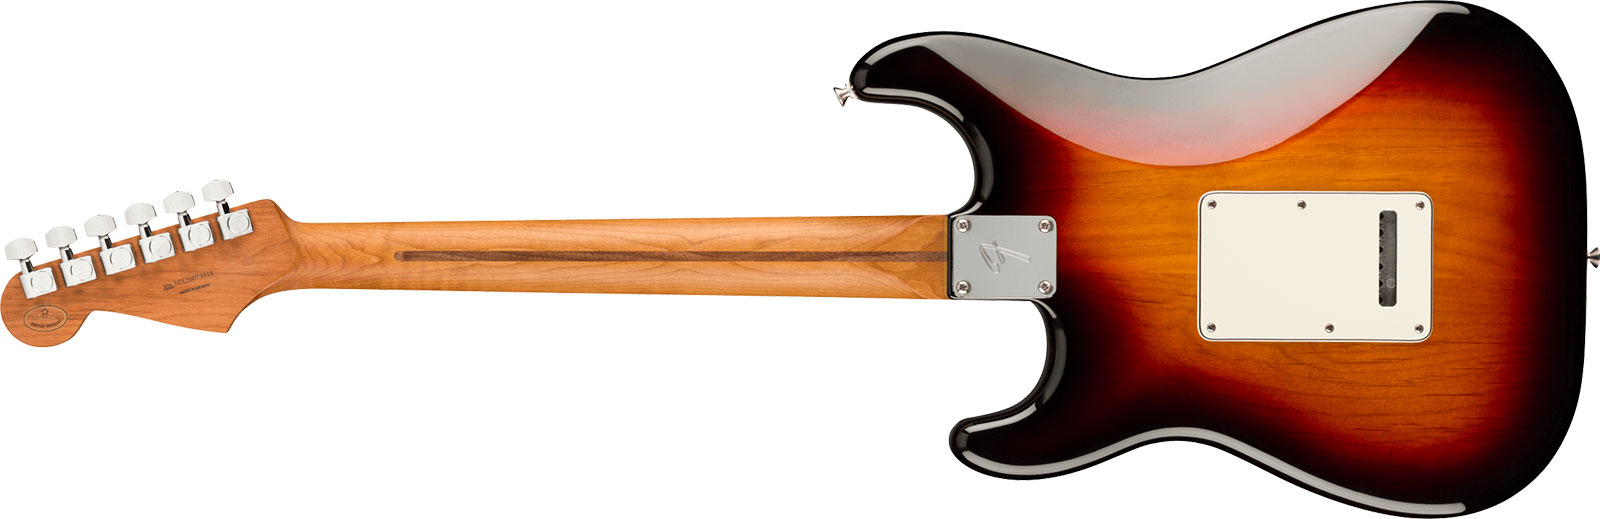 Fender Strat Player Roasted Maple Neck Ltd Mex 3s Trem Mn - 3 Color Sunburst - Guitarra eléctrica con forma de str. - Variation 1